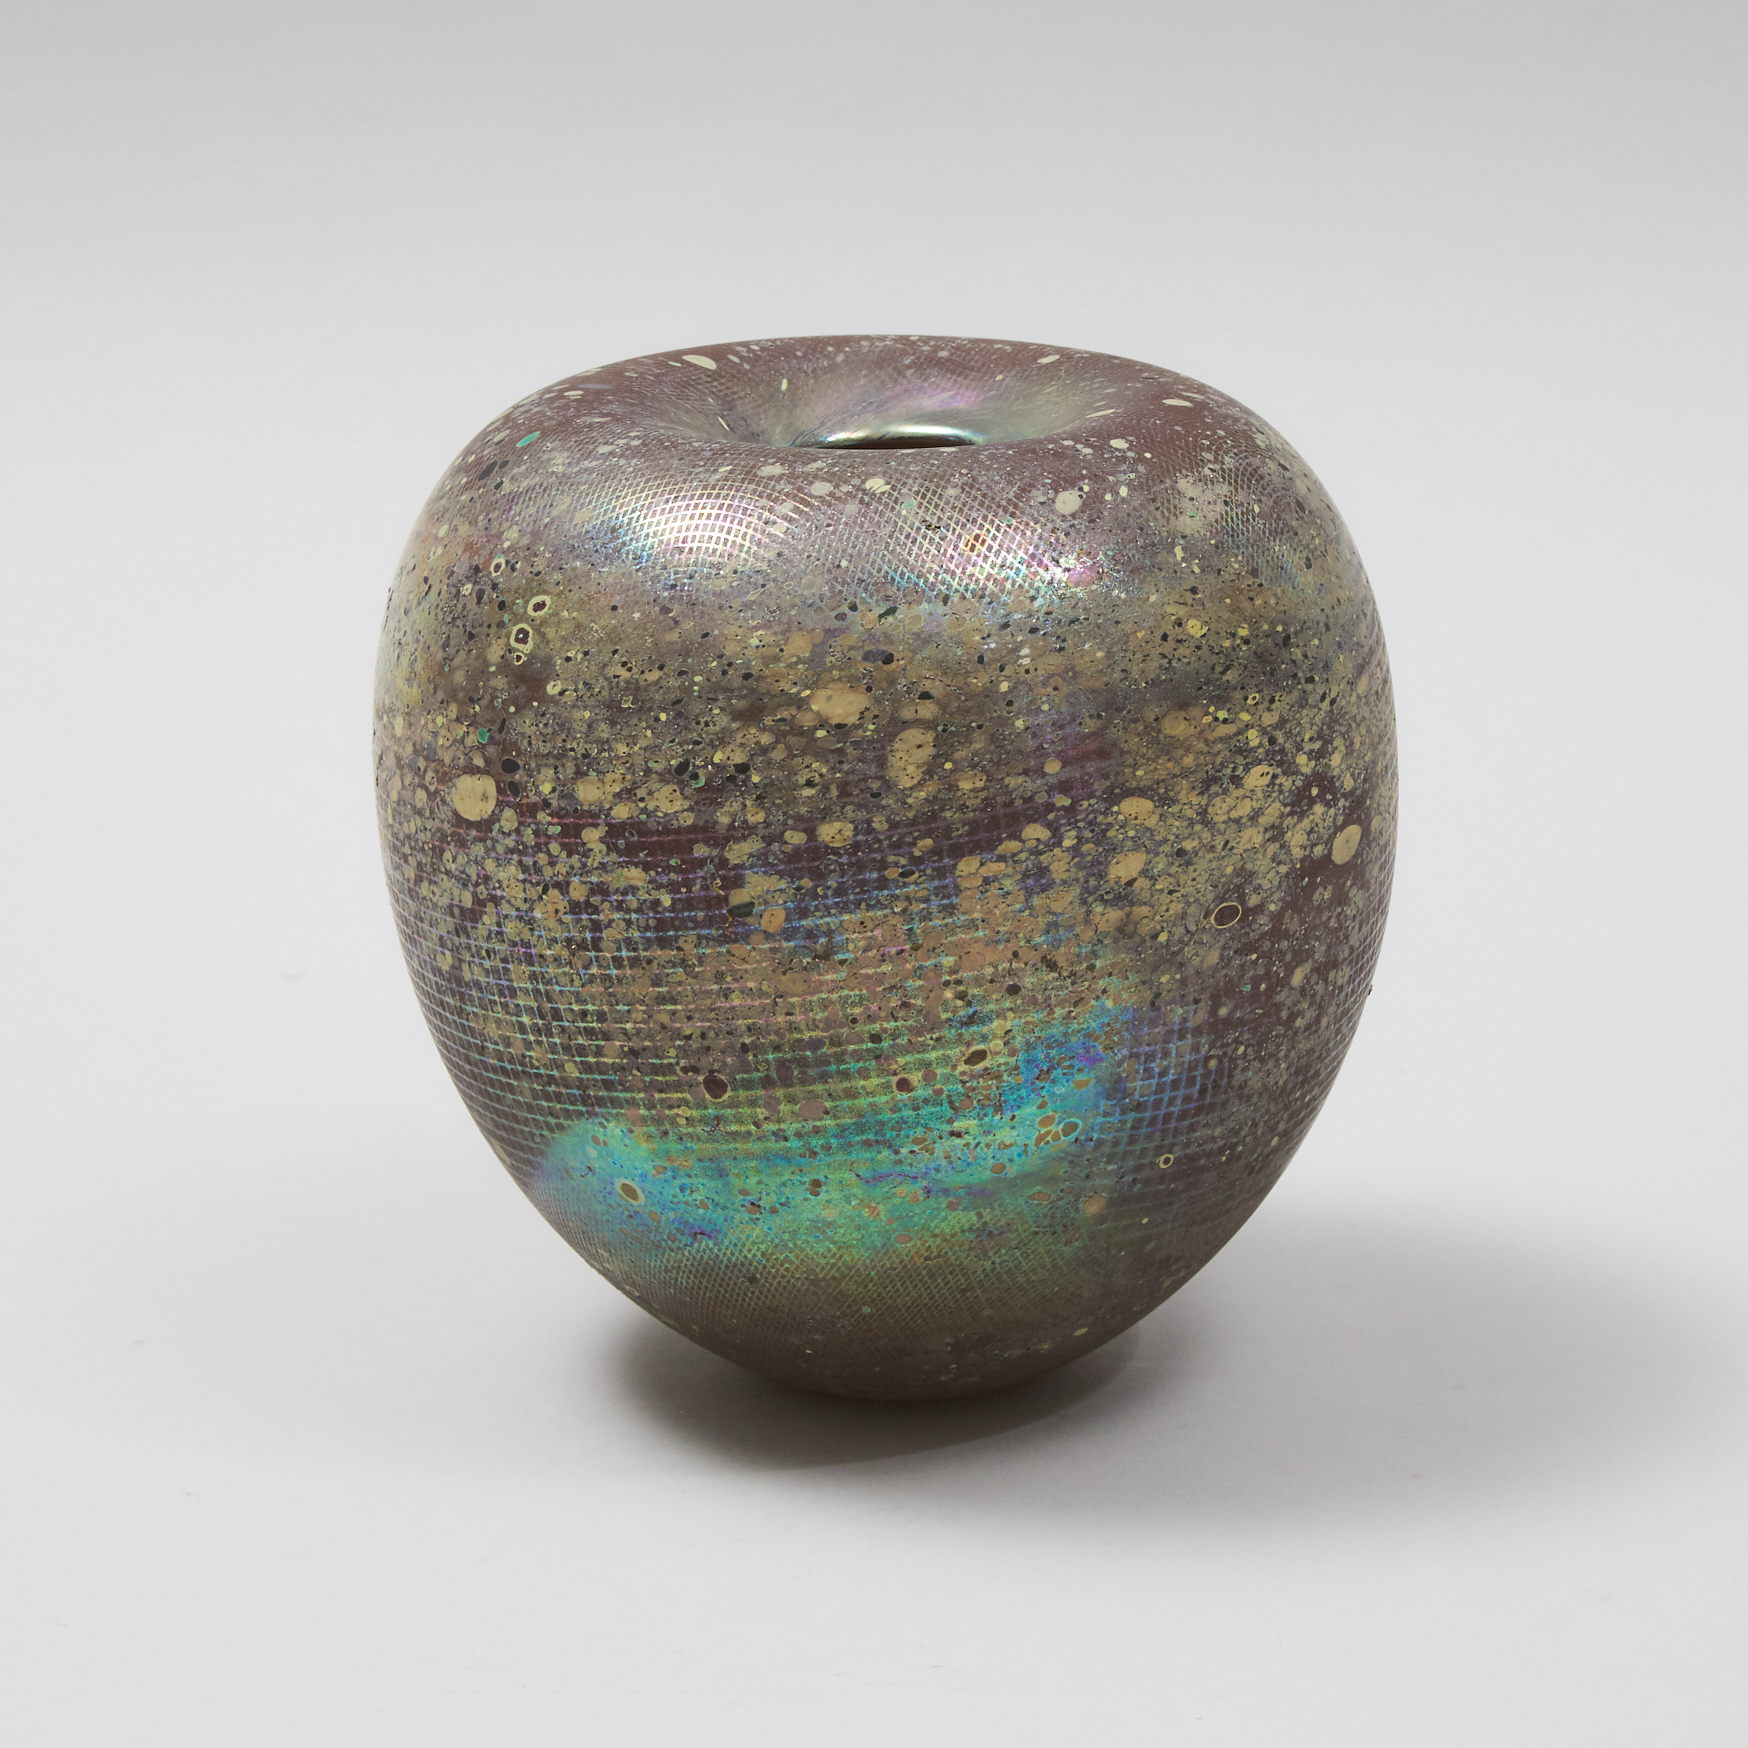 Daniel Crichton (Canadian, 1950-2002), Iridescent Glass Vase, 1981